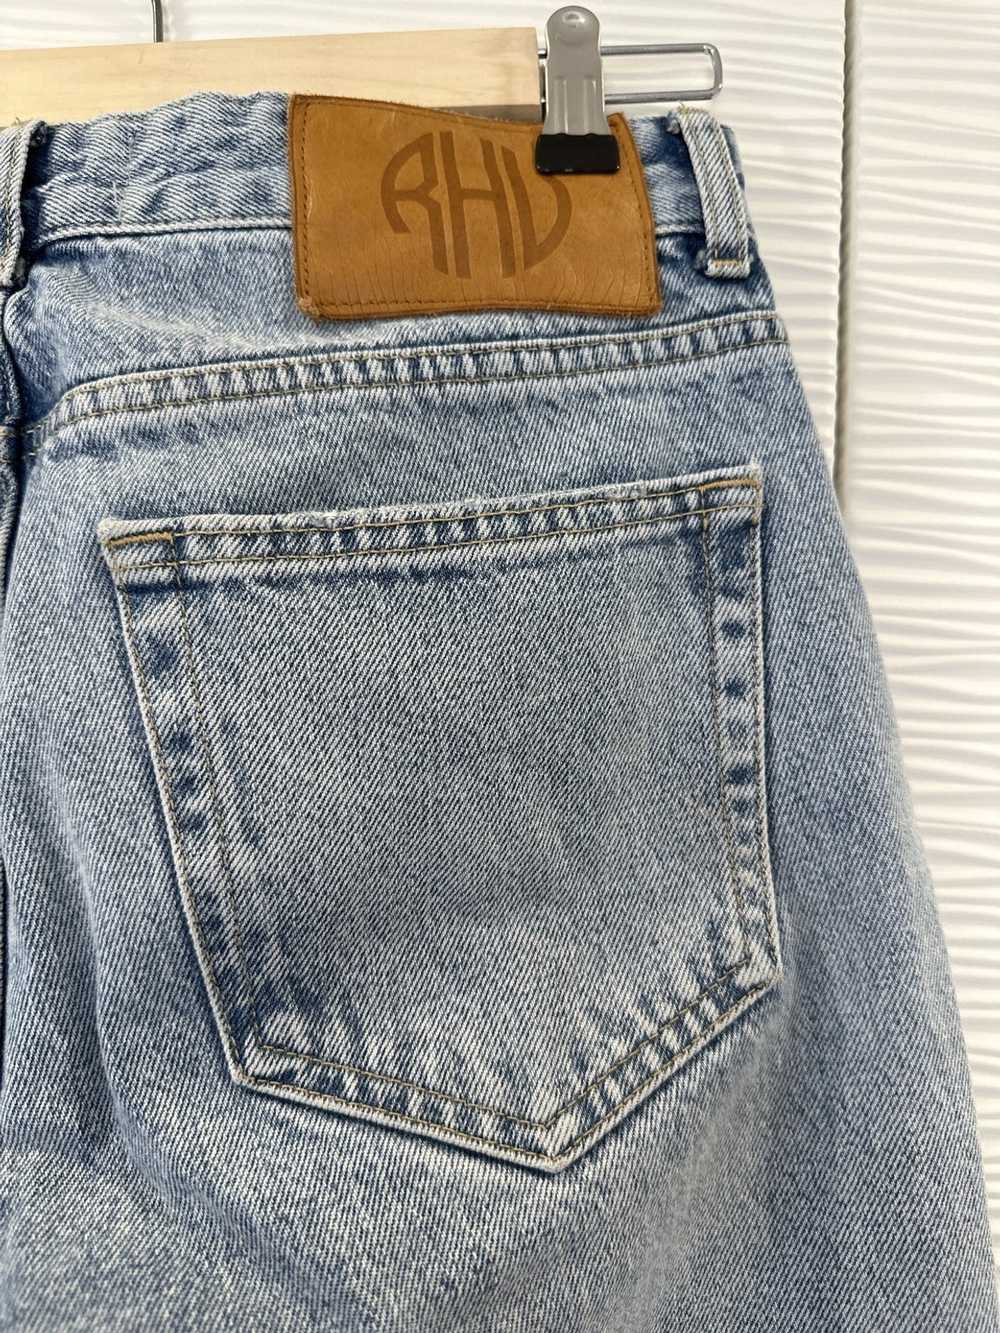 Rhude × Zara Zara x Rhuigi Denim jeans - image 5